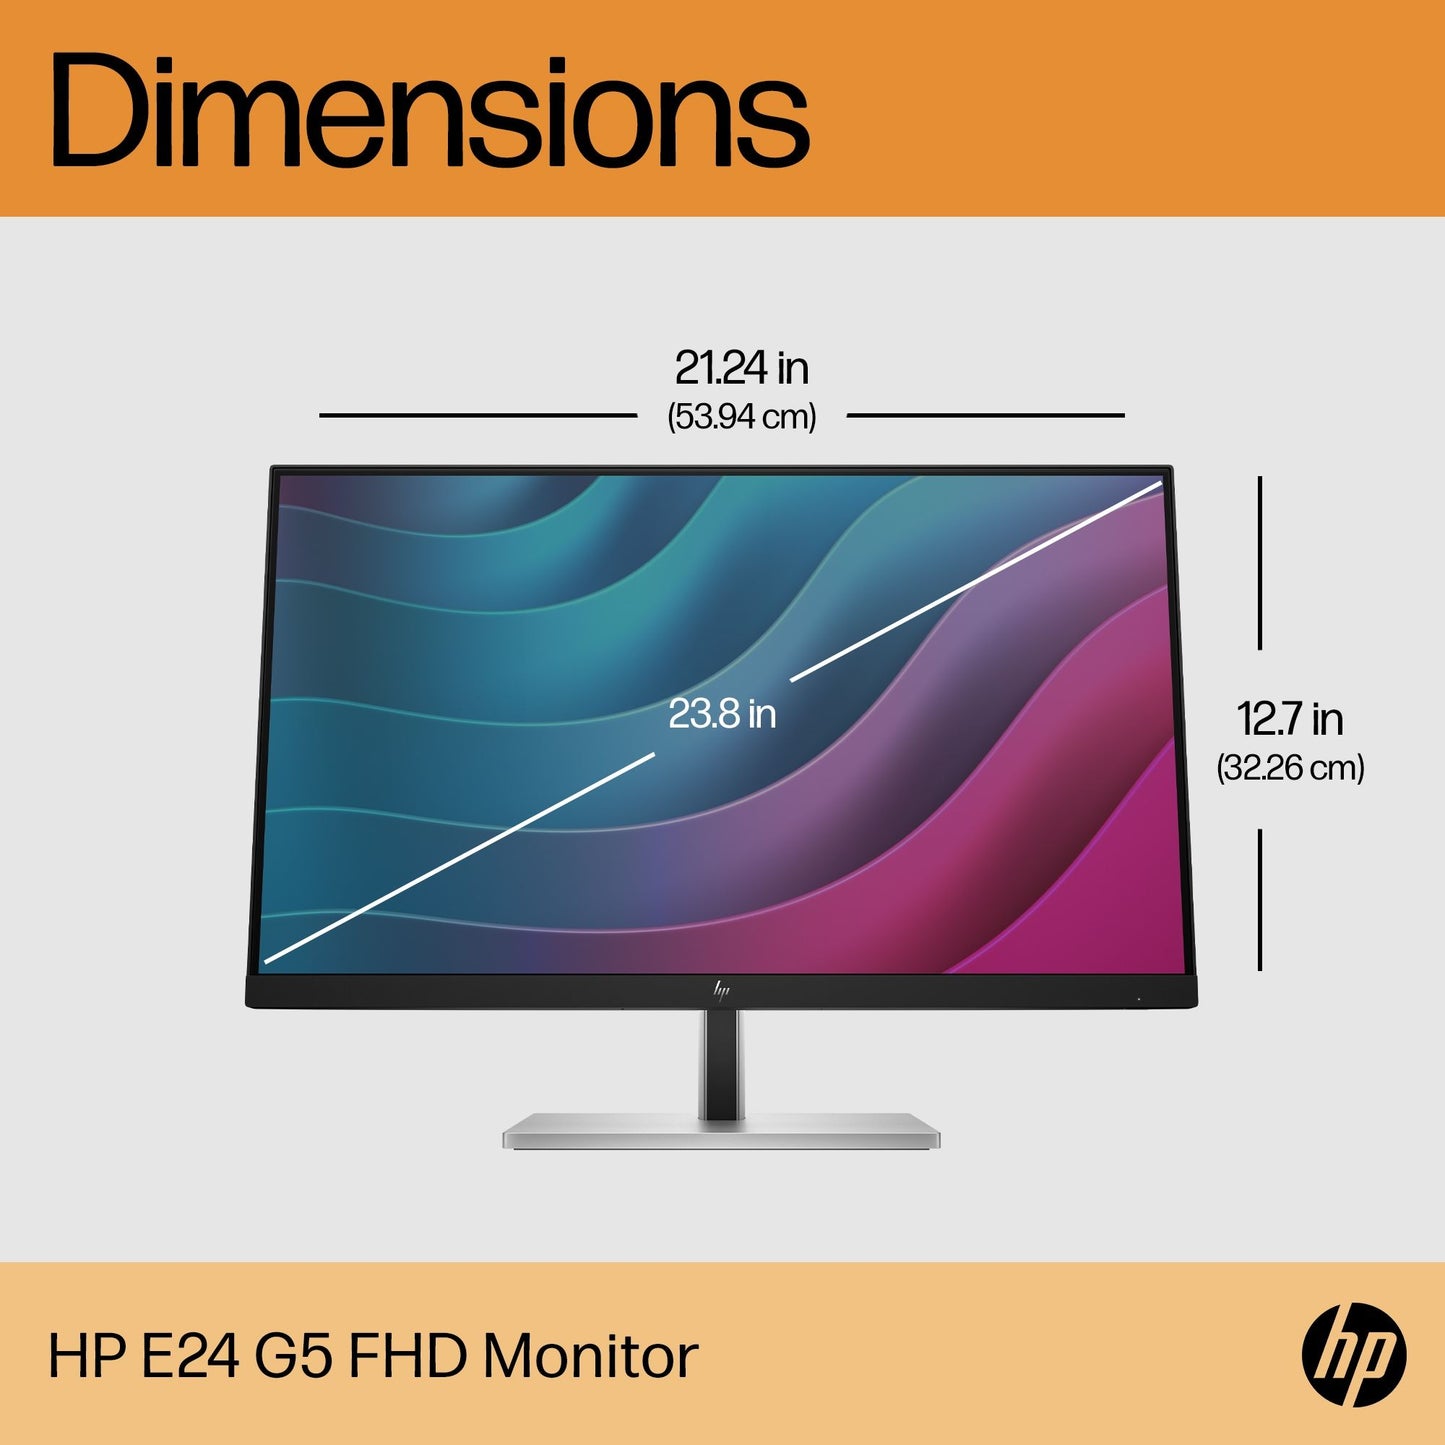 HP E24 G5 FHD Monitor computer monitor